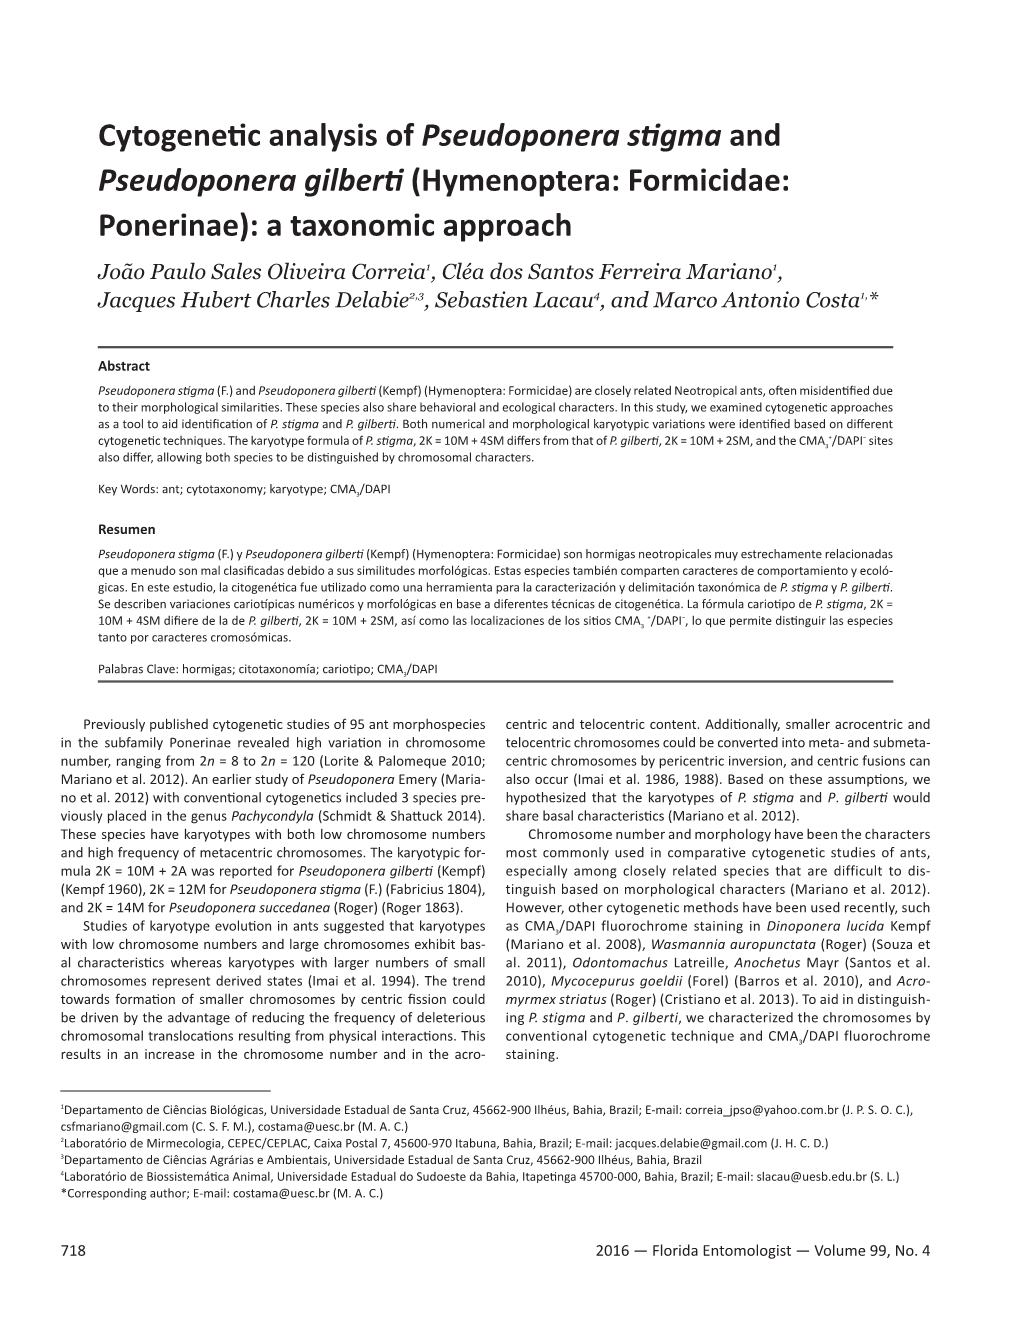 Cytogenetic Analysis of Pseudoponera Stigma and Pseudoponera Gilberti (Hymenoptera: Formicidae: Ponerinae): a Taxonomic Approach